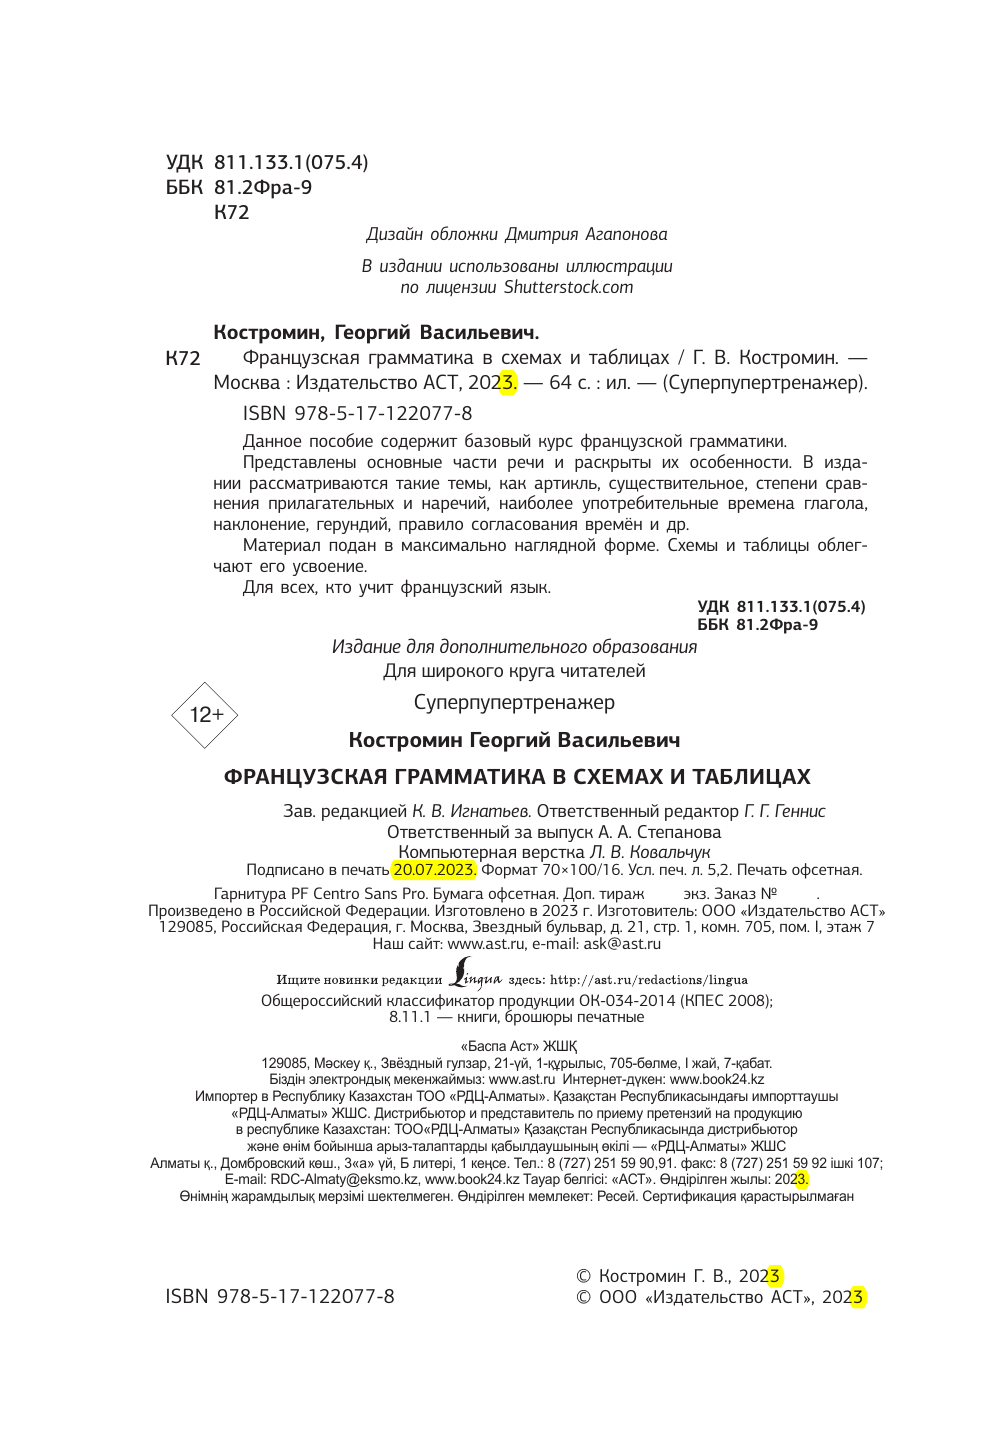 Костромин Георгий Васильевич Французская грамматика в схемах и таблицах - страница 4